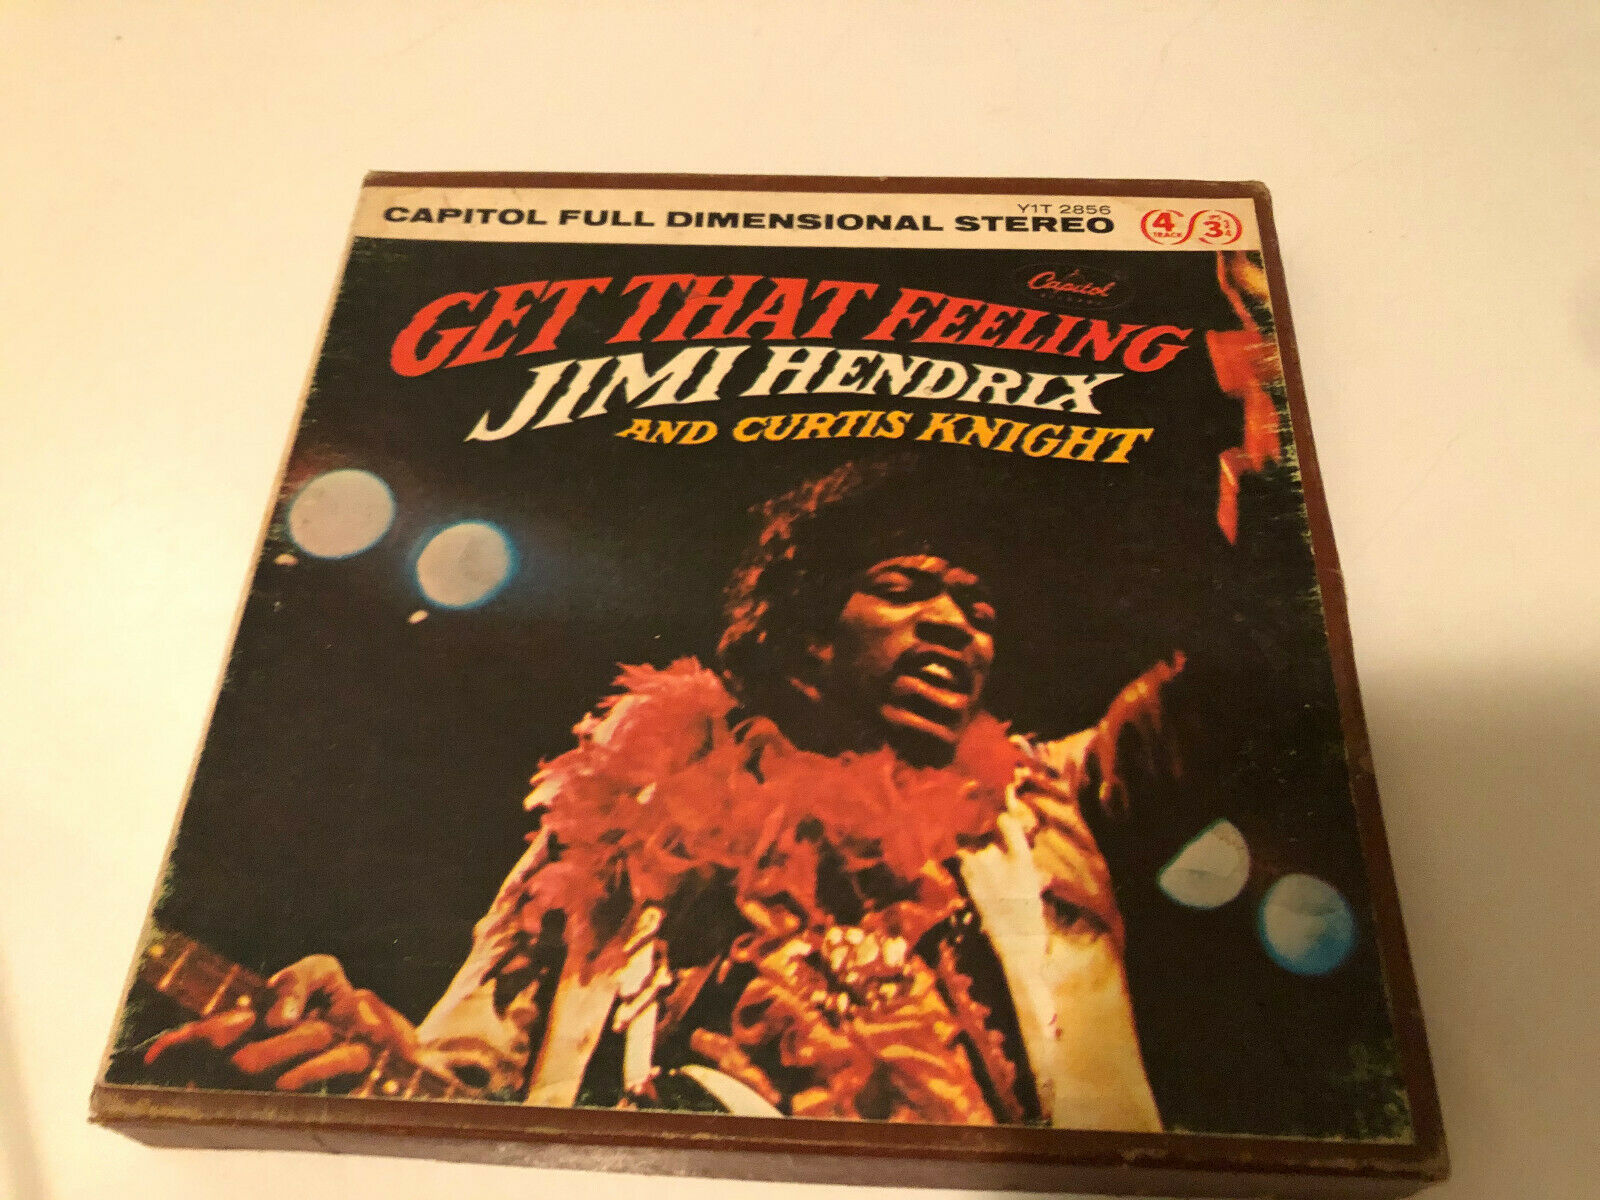 Reel-to-reel: Jimi Hendrix And Curtis Knight Get That Feeling Reel To Reel Audio